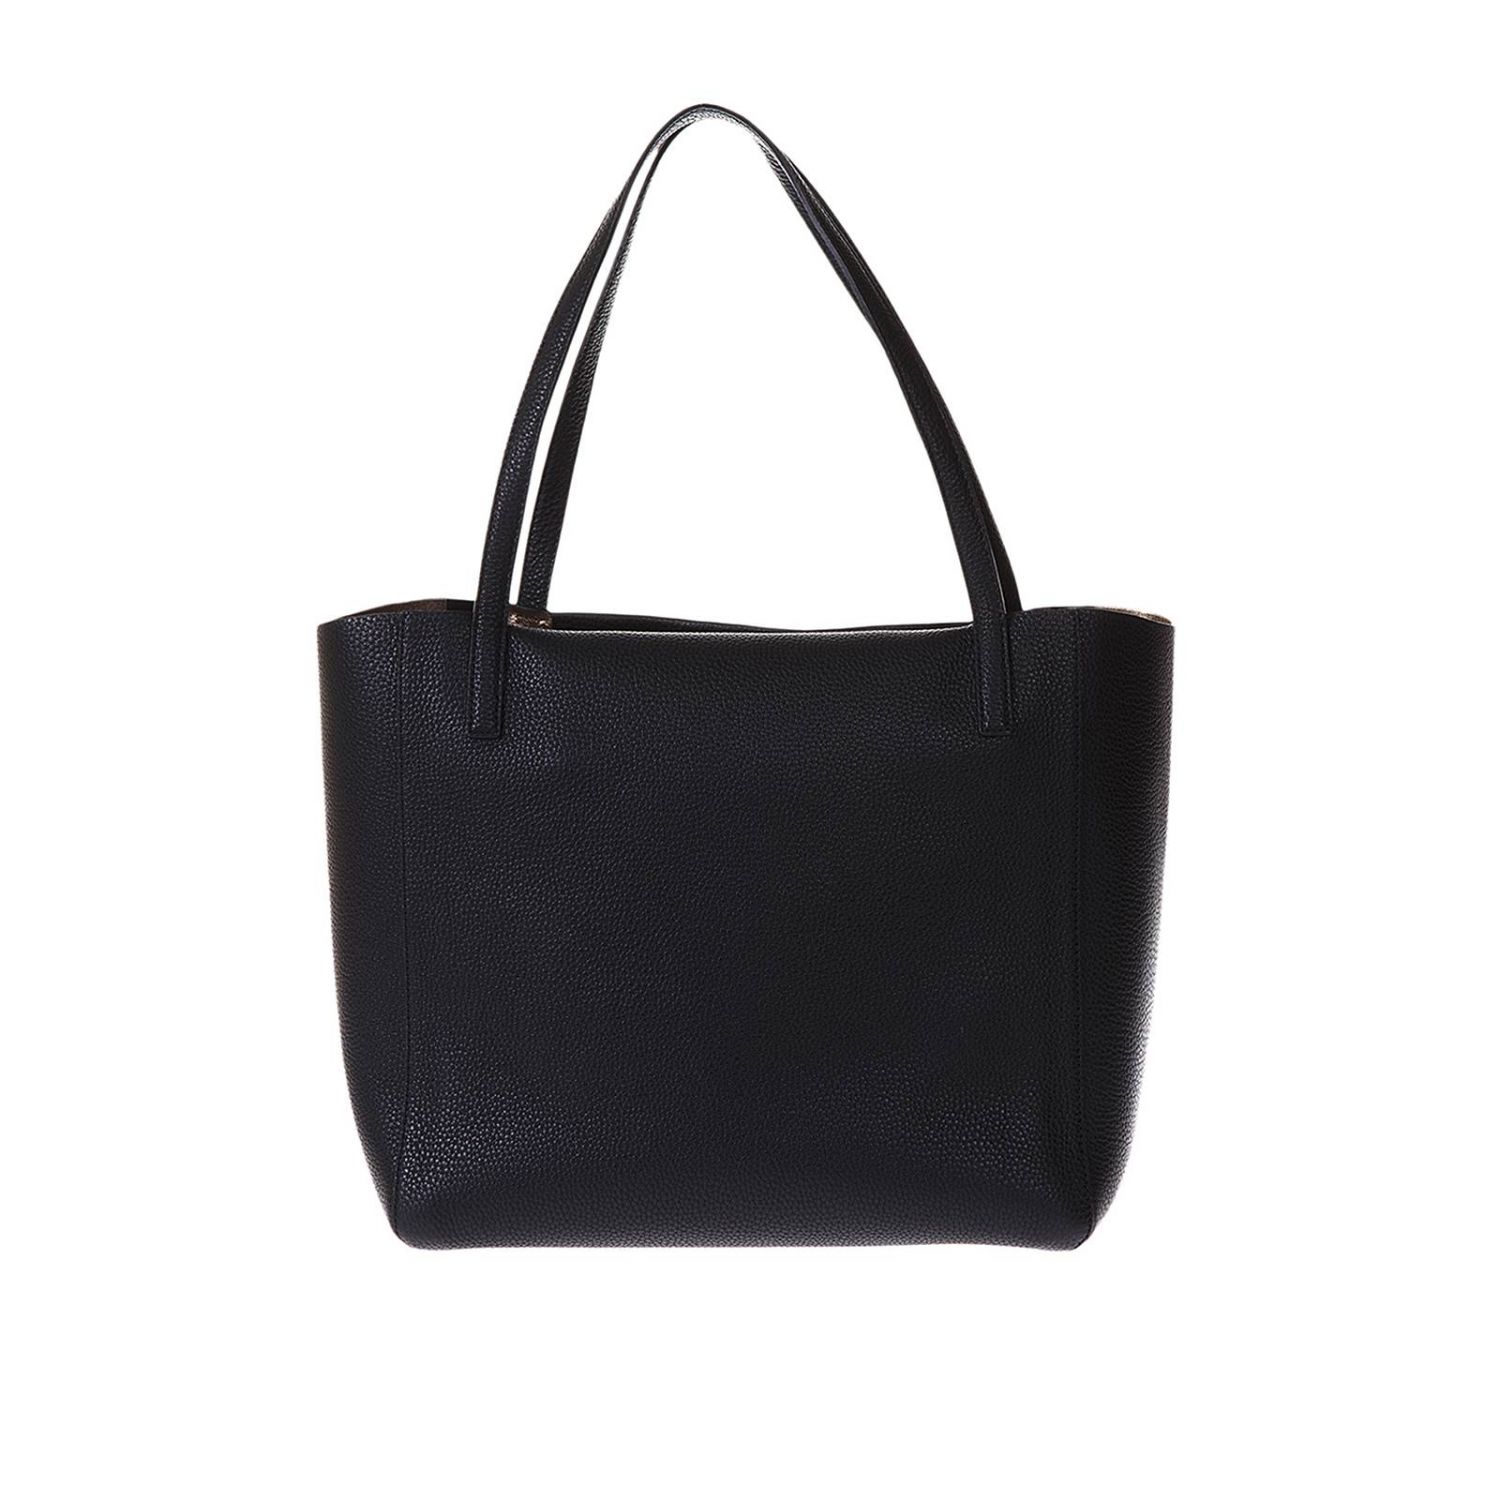 SALVATORE FERRAGAMO: Handbag women - Black | Handbag Salvatore ...